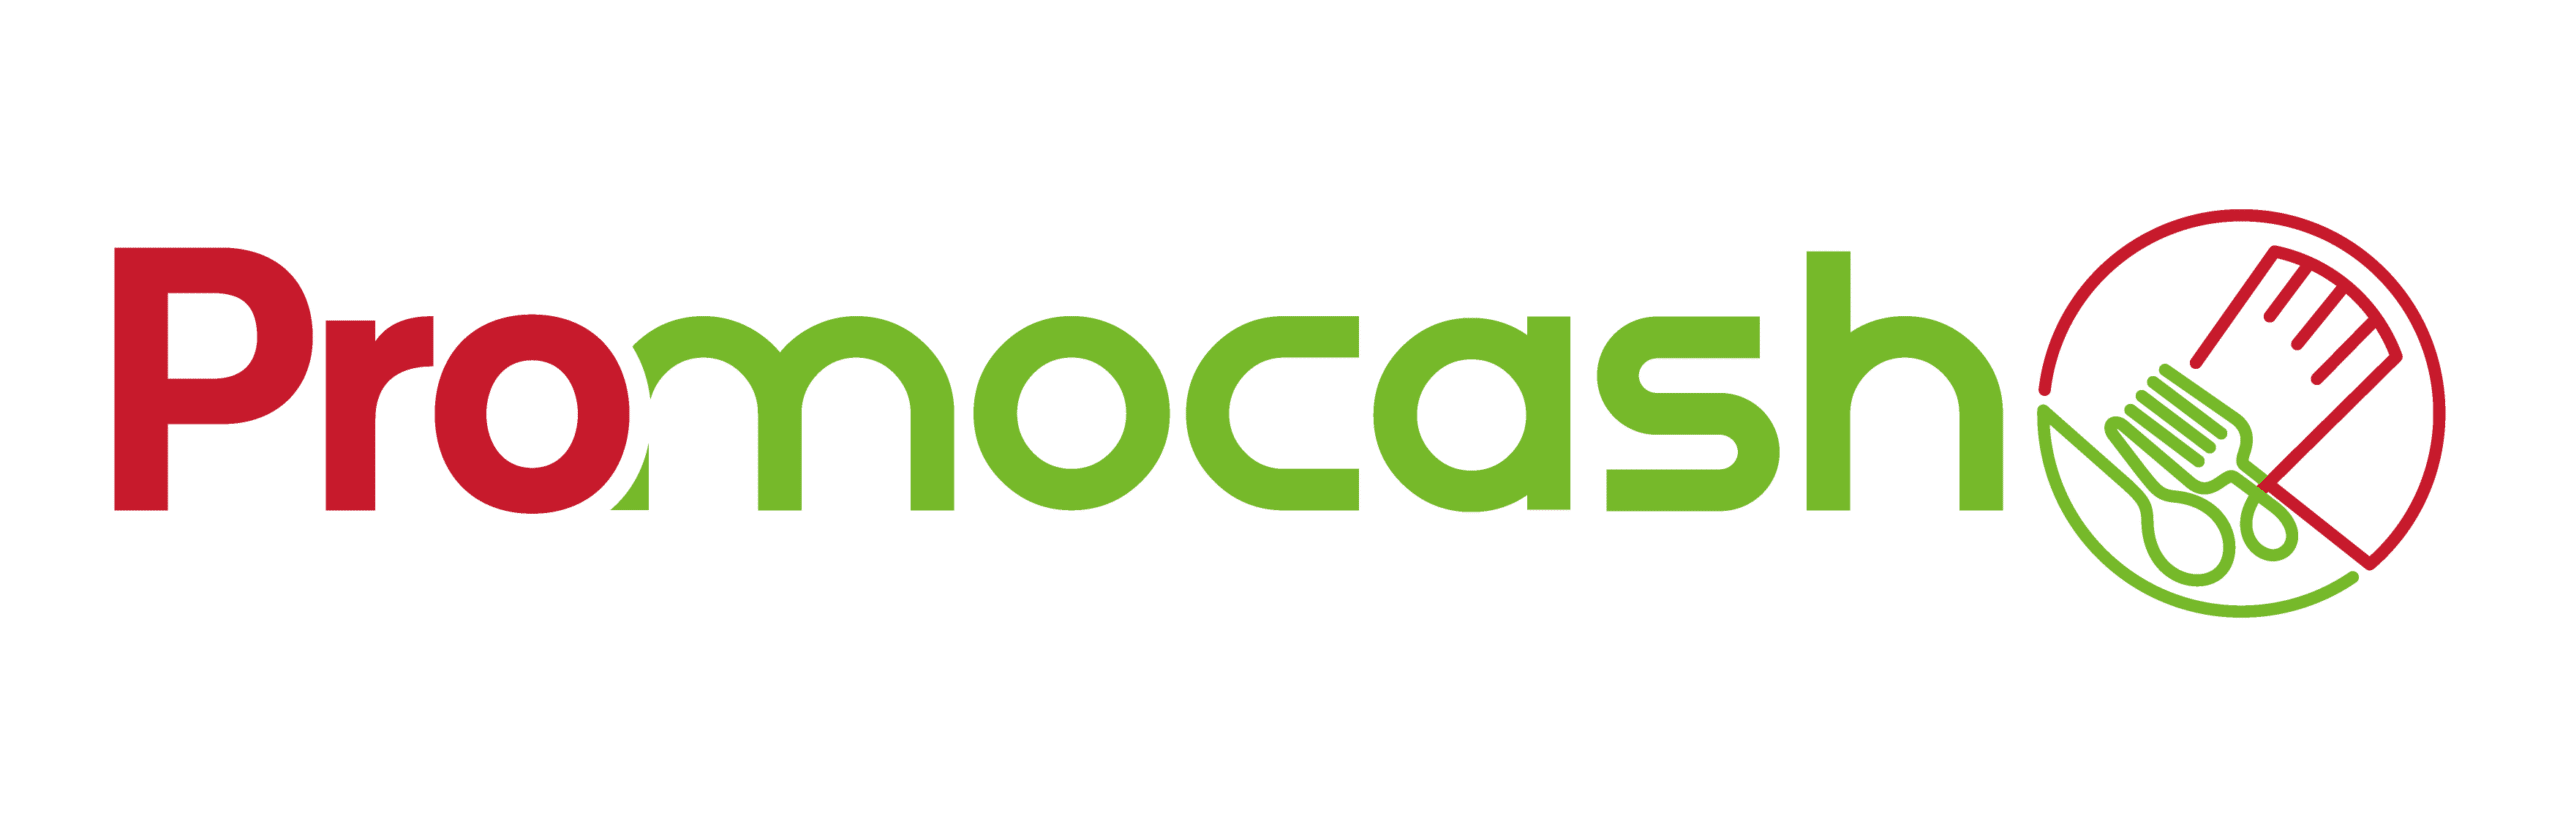 logo Promocash